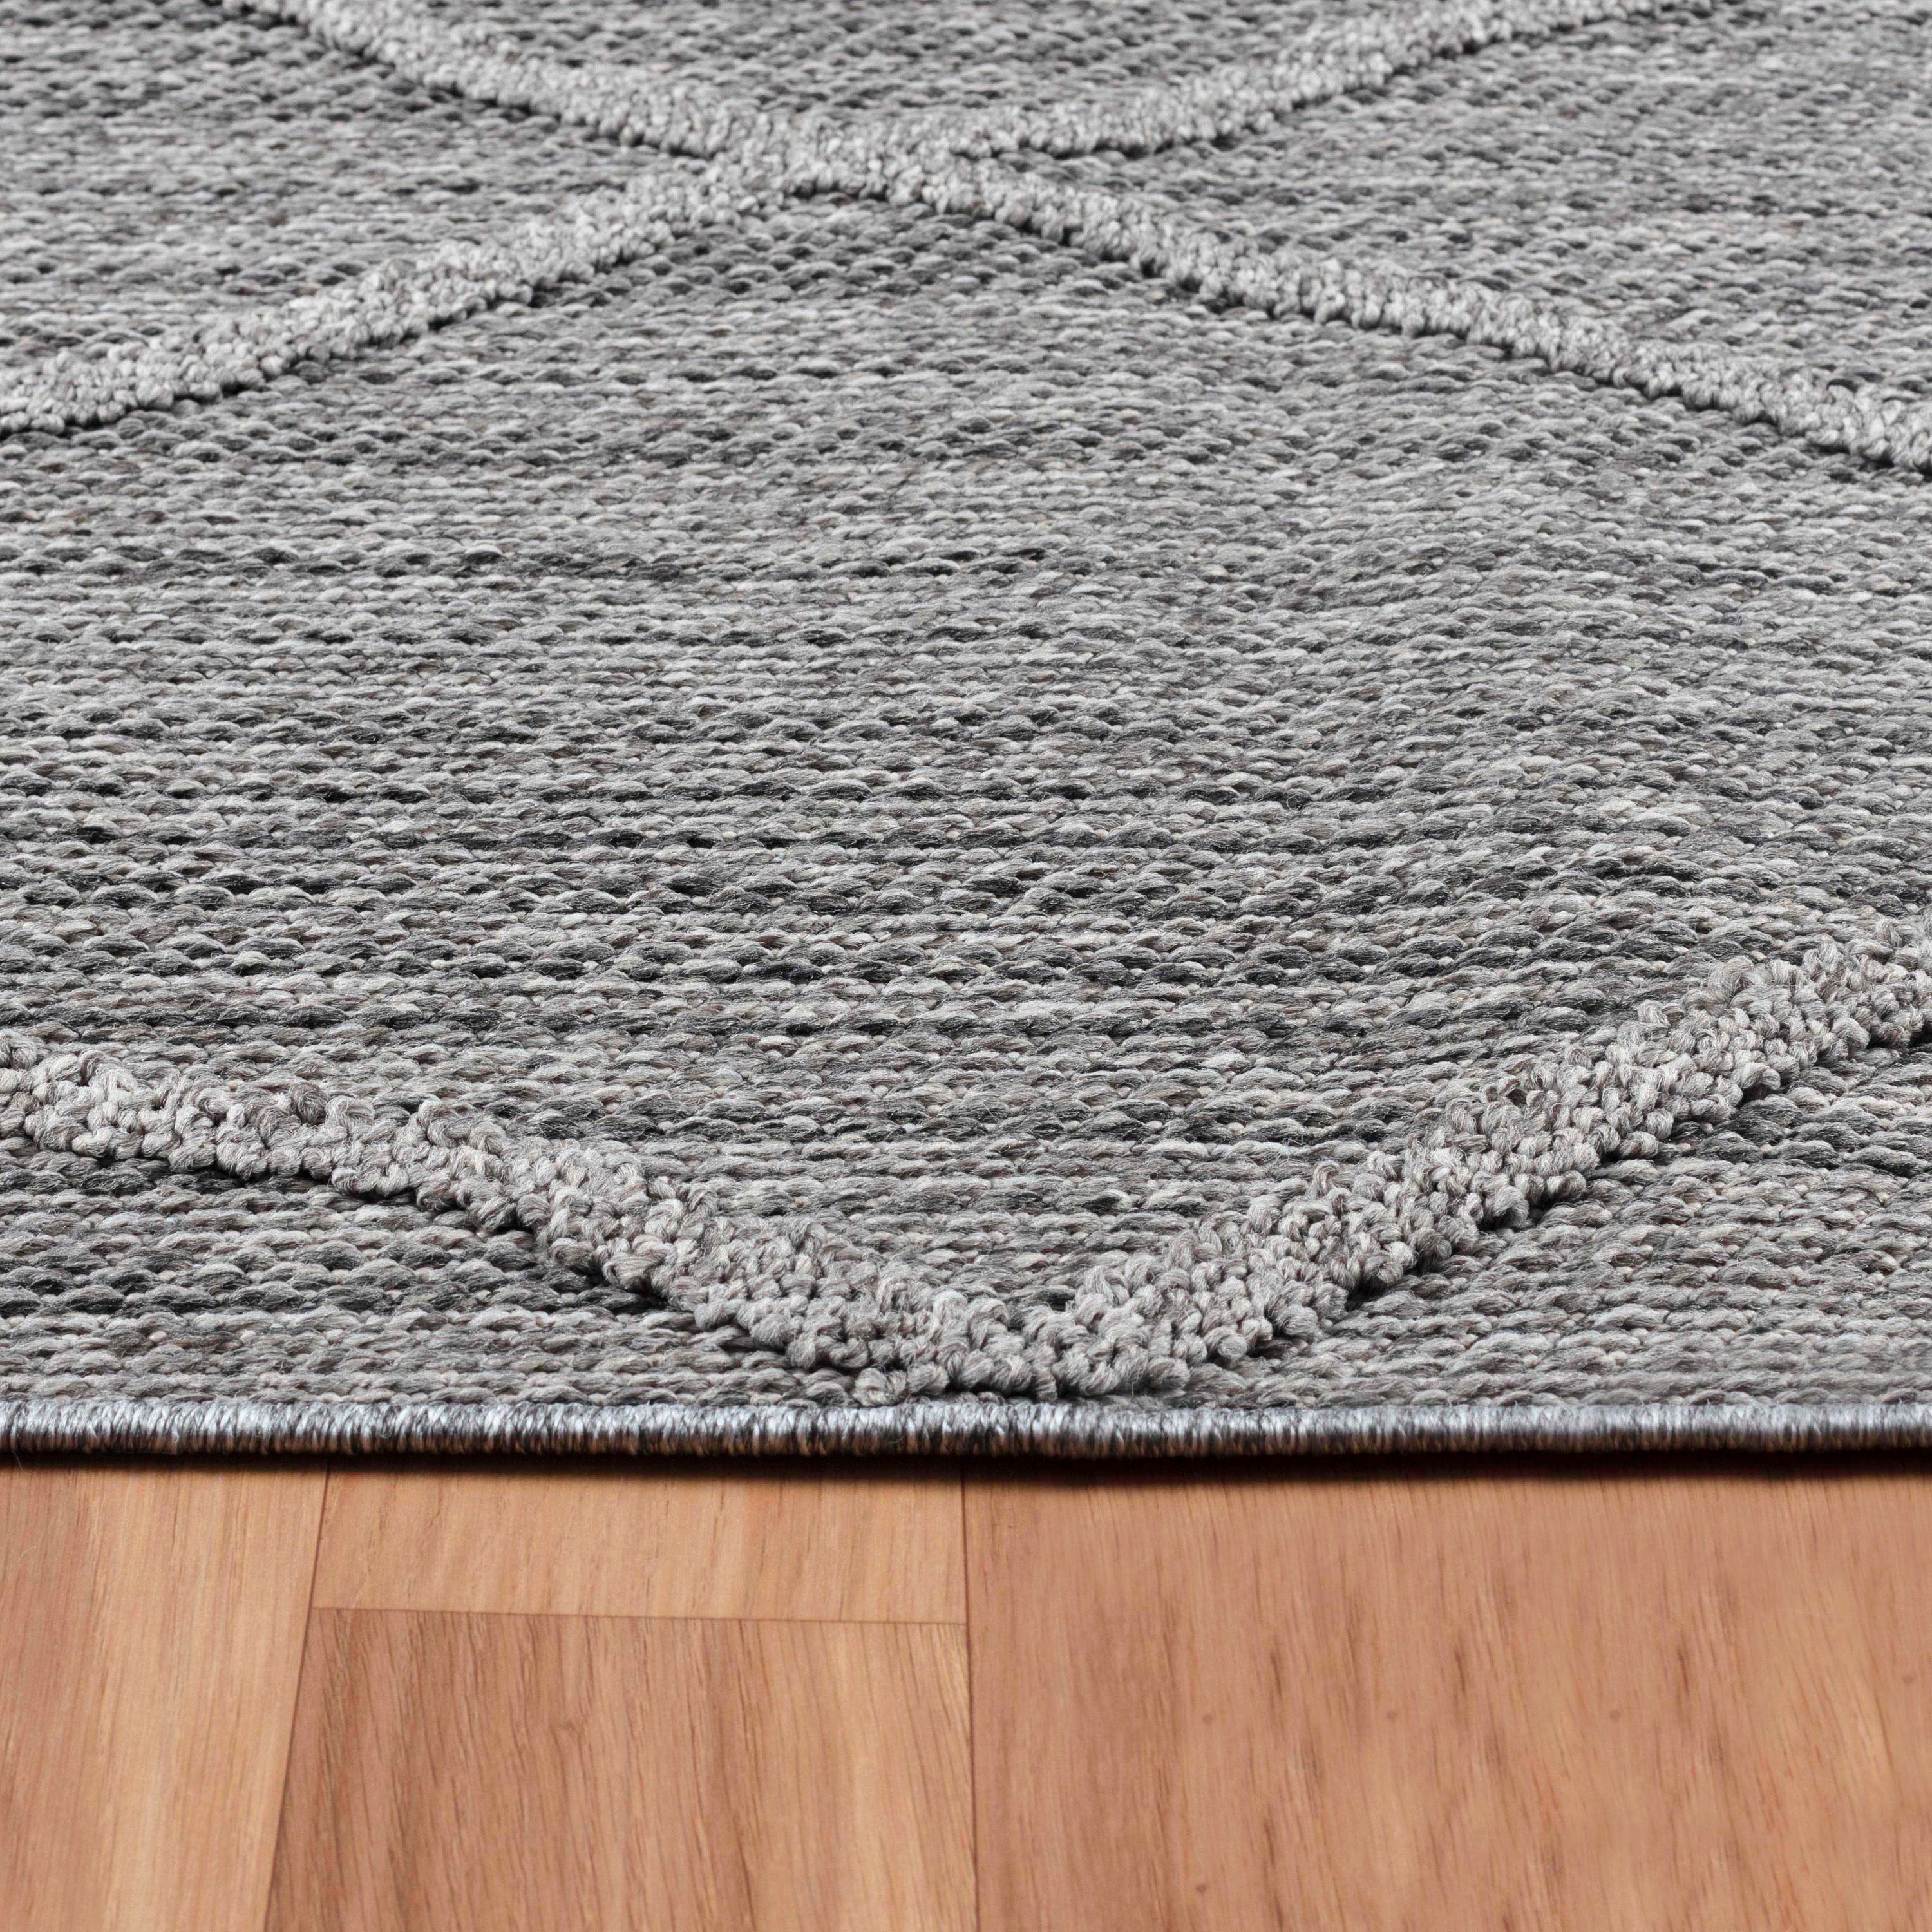 In- Outdoor Teppich Flachgewebt Sisal Optik Einfarbig 3D Rauten Design Grau